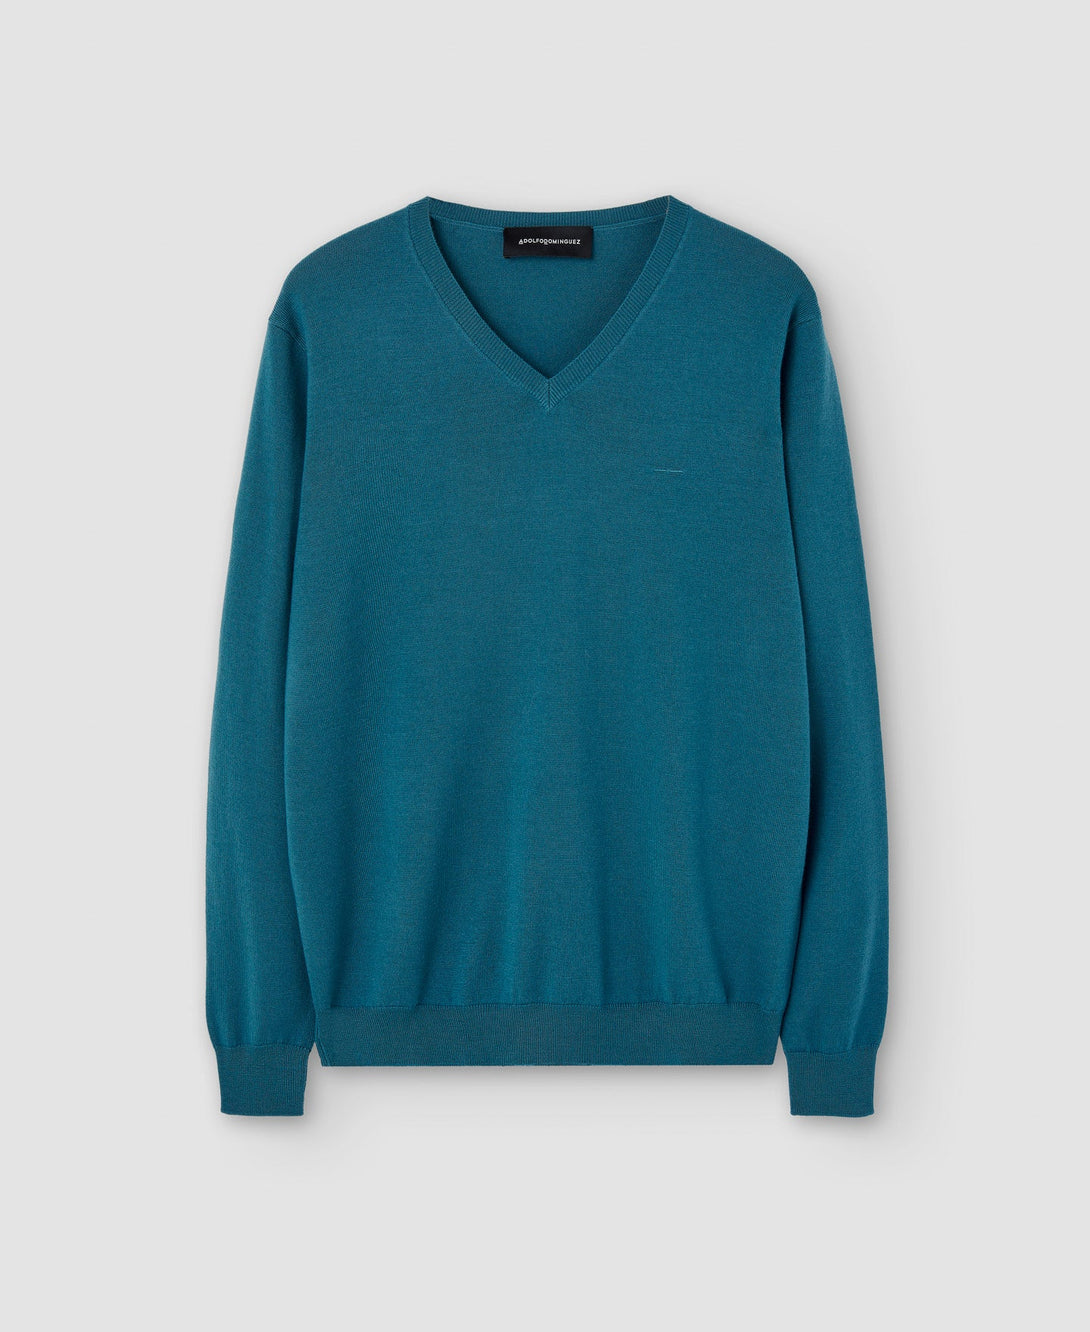 Men Jersey | Turquoise Merino Wool V-Neck Sweater by Spanish designer Adolfo Dominguez